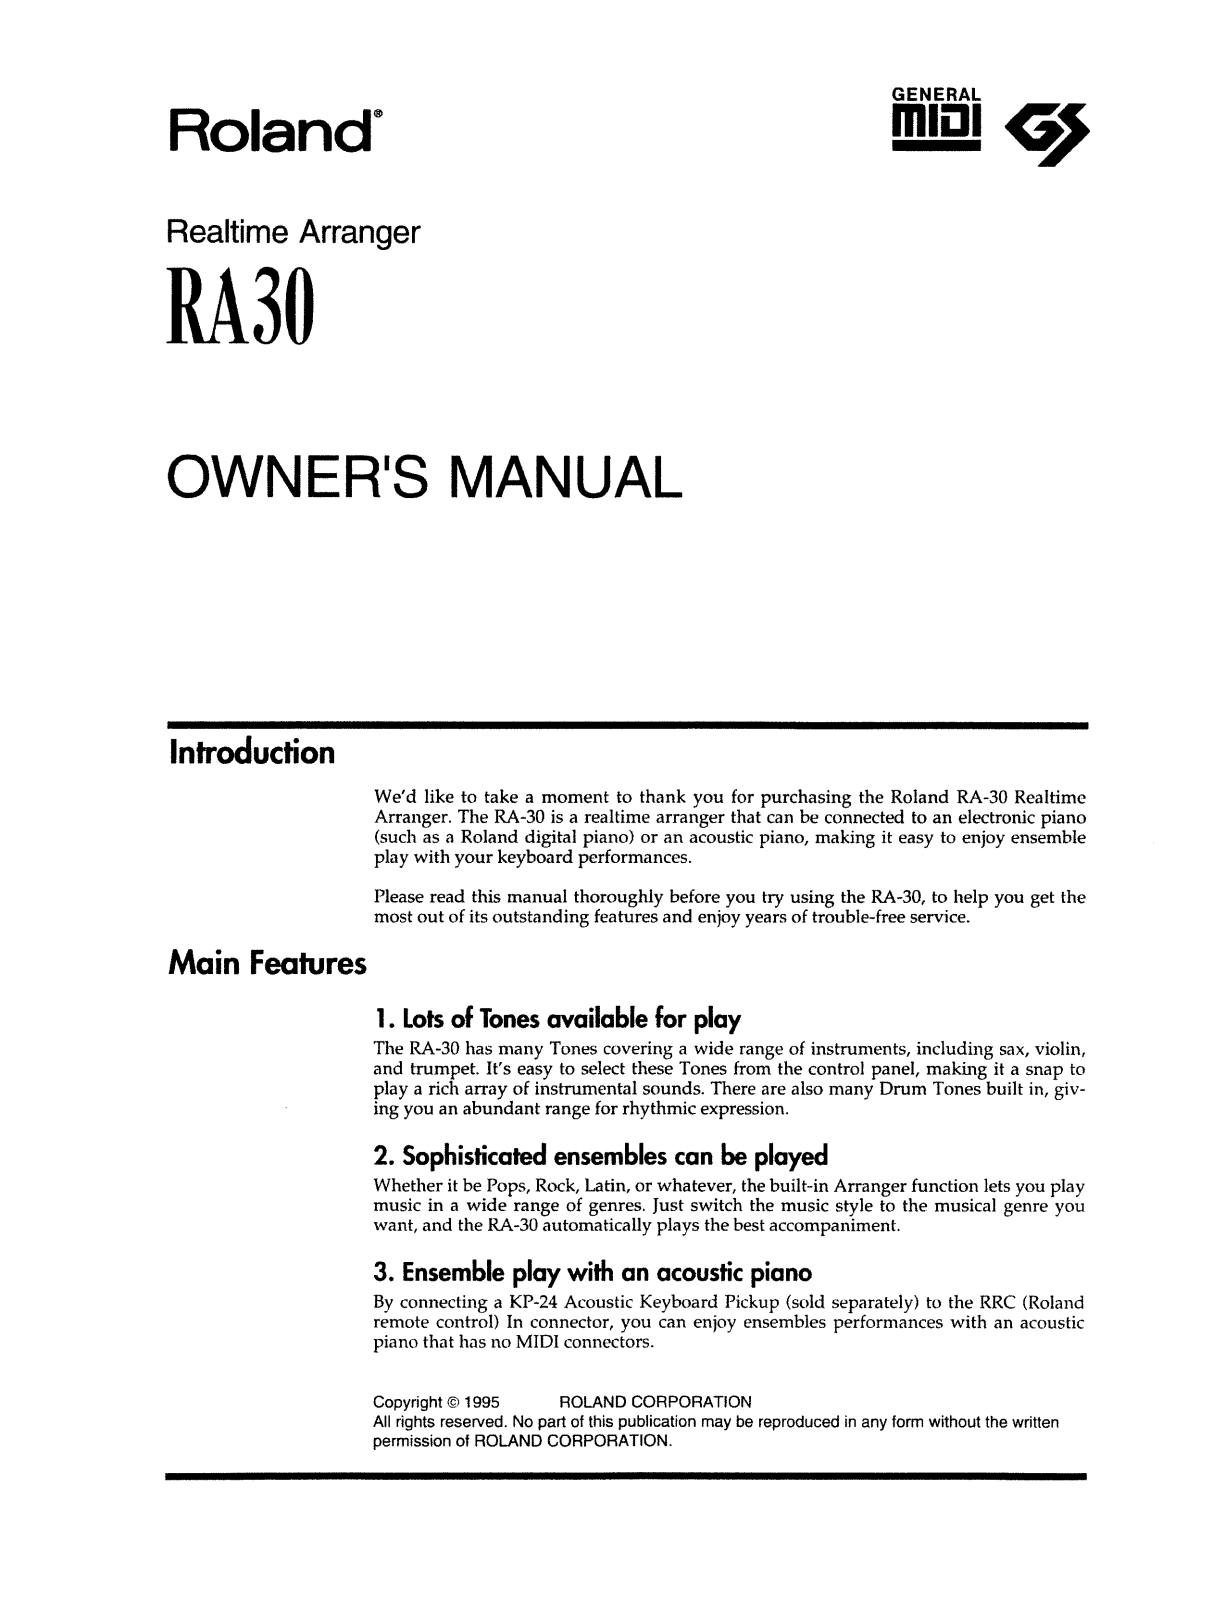 Roland RA-30 User Manual